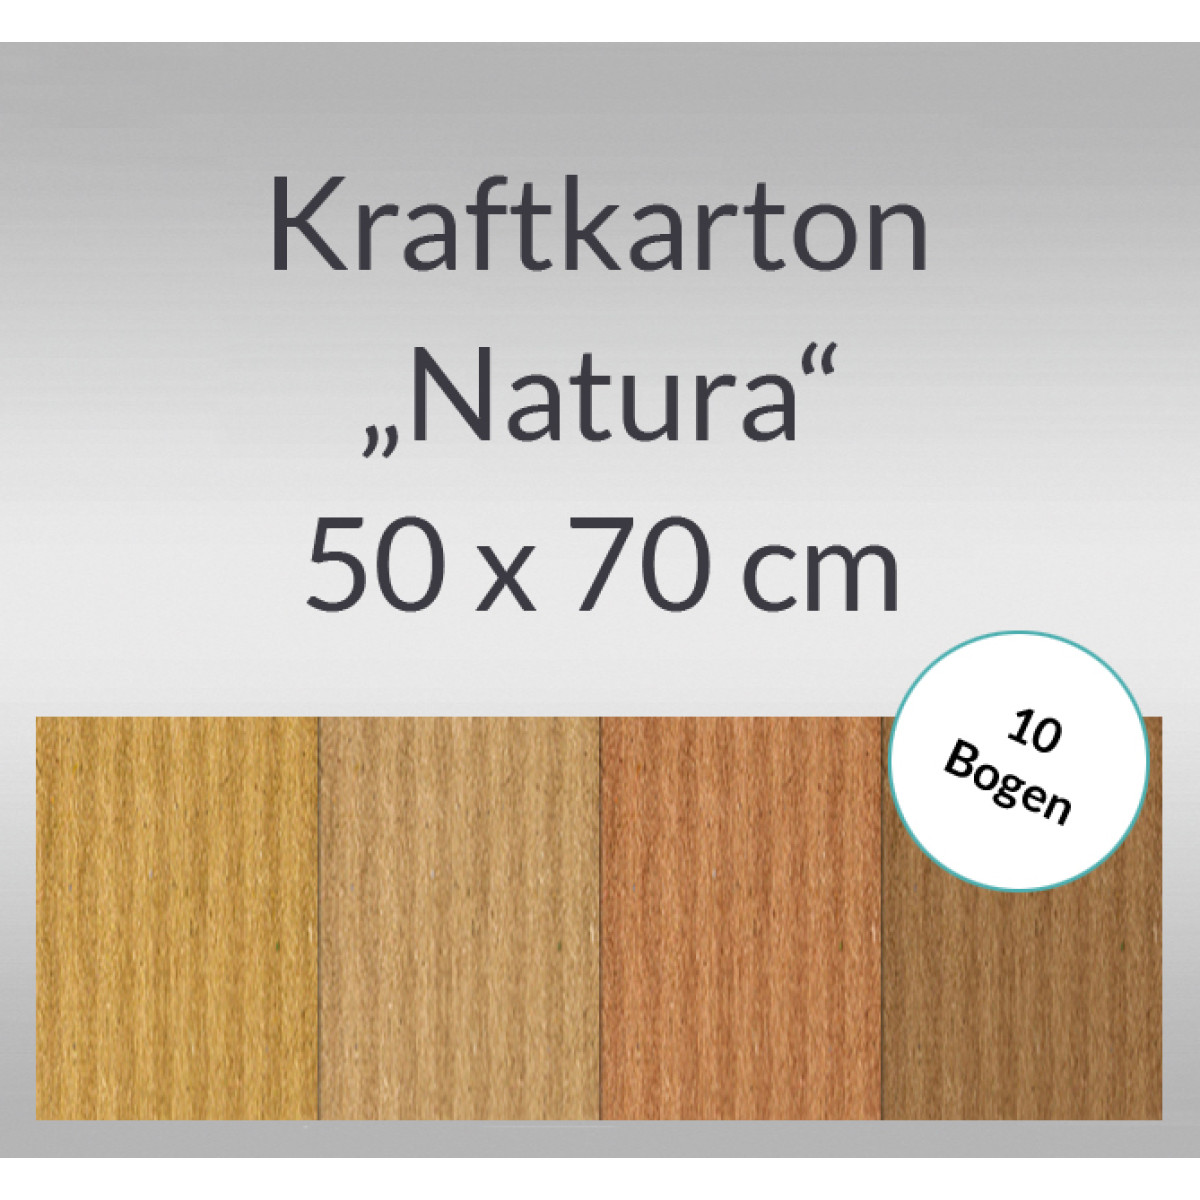 Kraftkarton "Natura" 50 x 70 cm - 10 Bogen